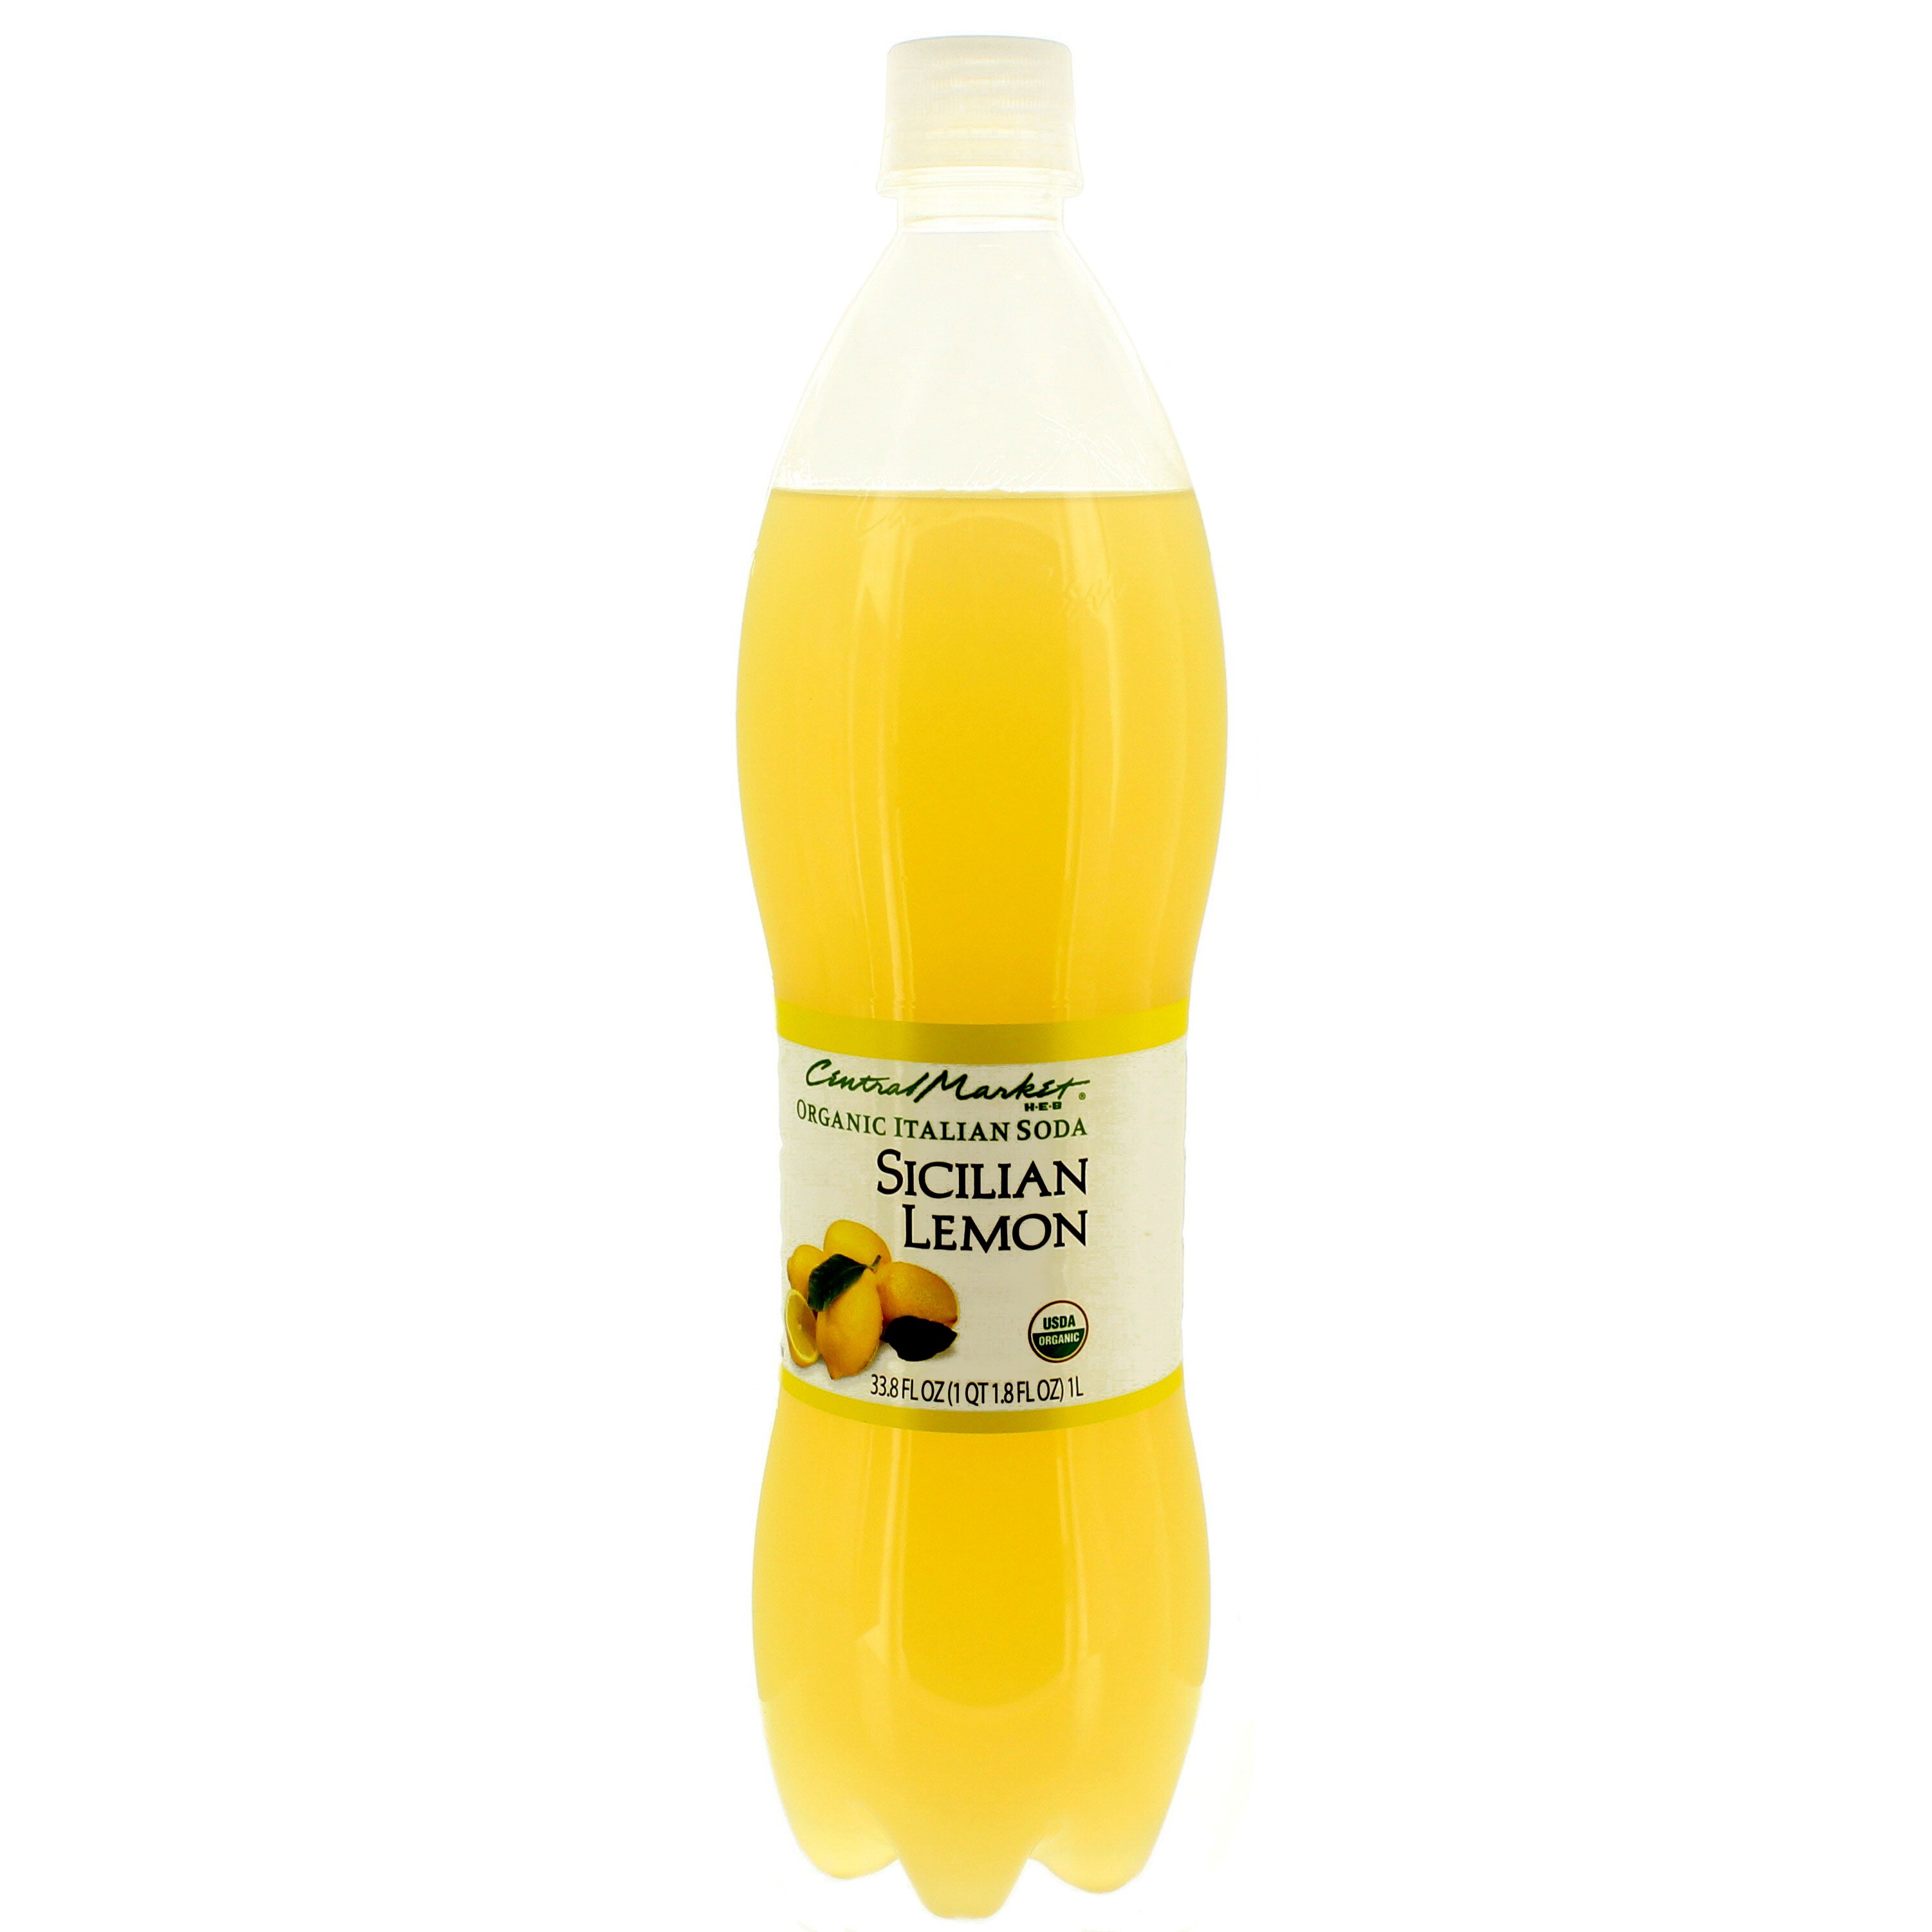 Central Market Sicilian Lemon Organic Italian Soda | lupon.gov.ph